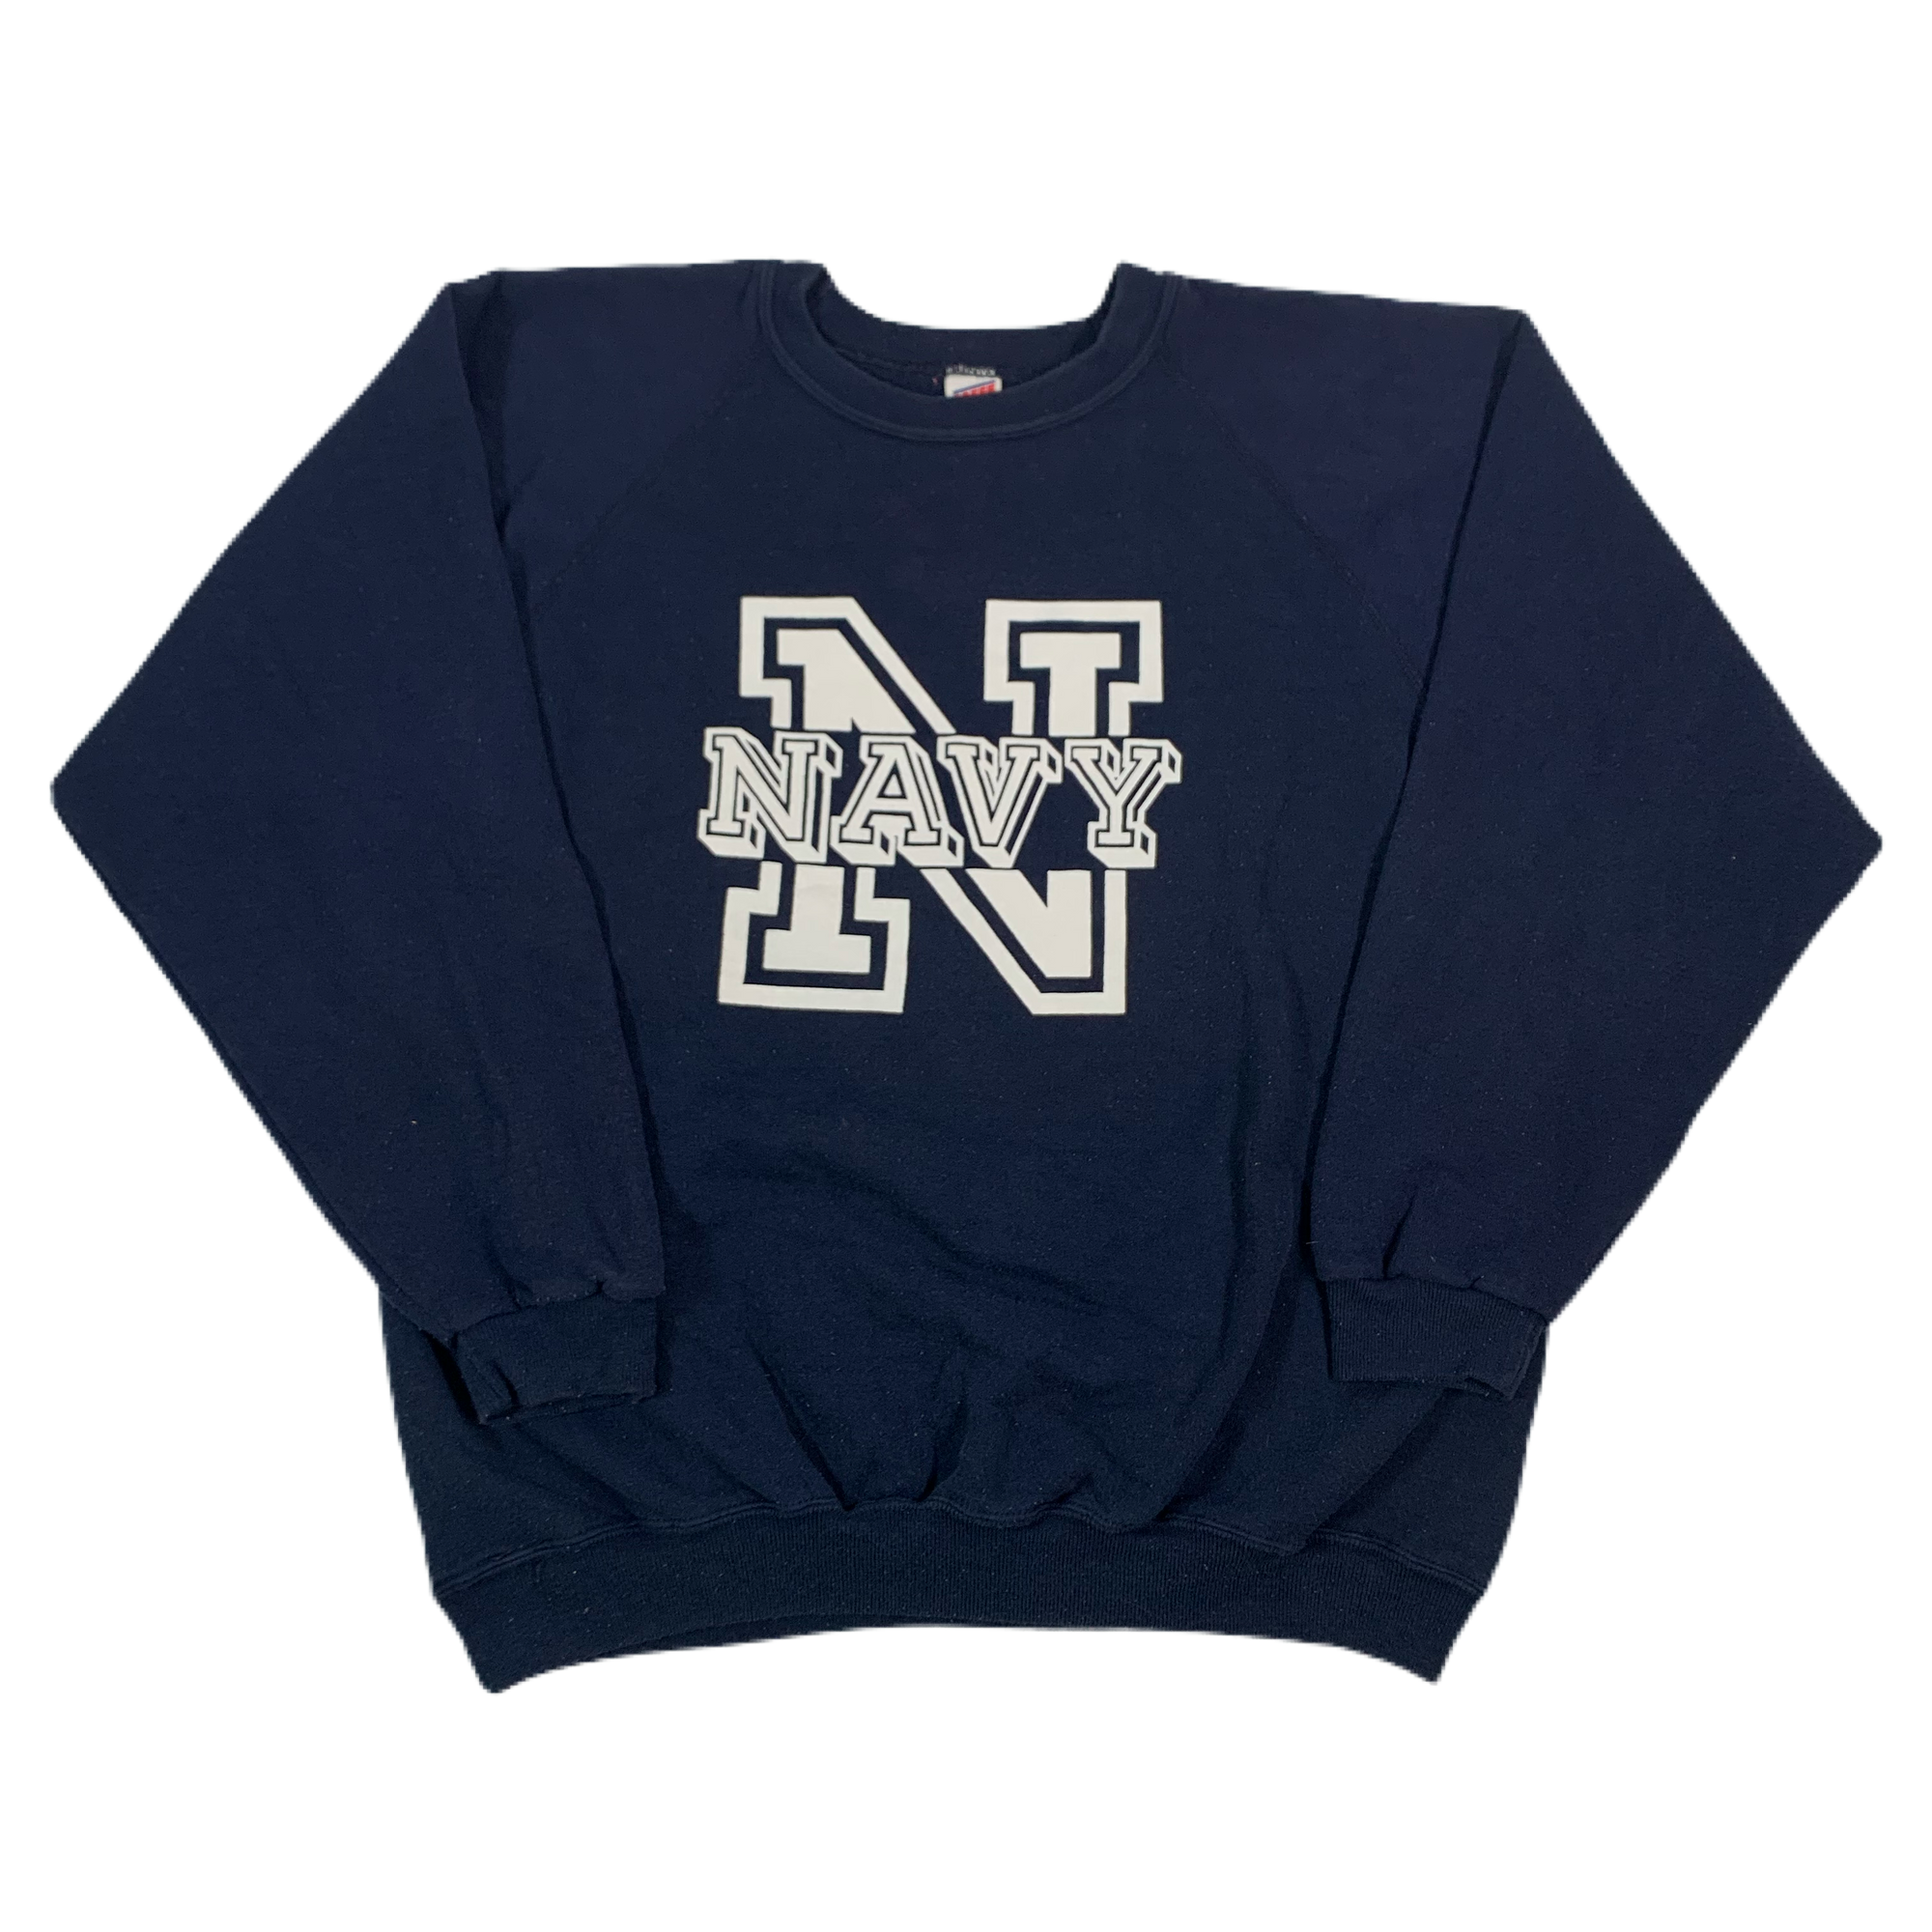 Vintage United States Navy “Soffe” Crewneck Sweatshirt - jointcustodydc